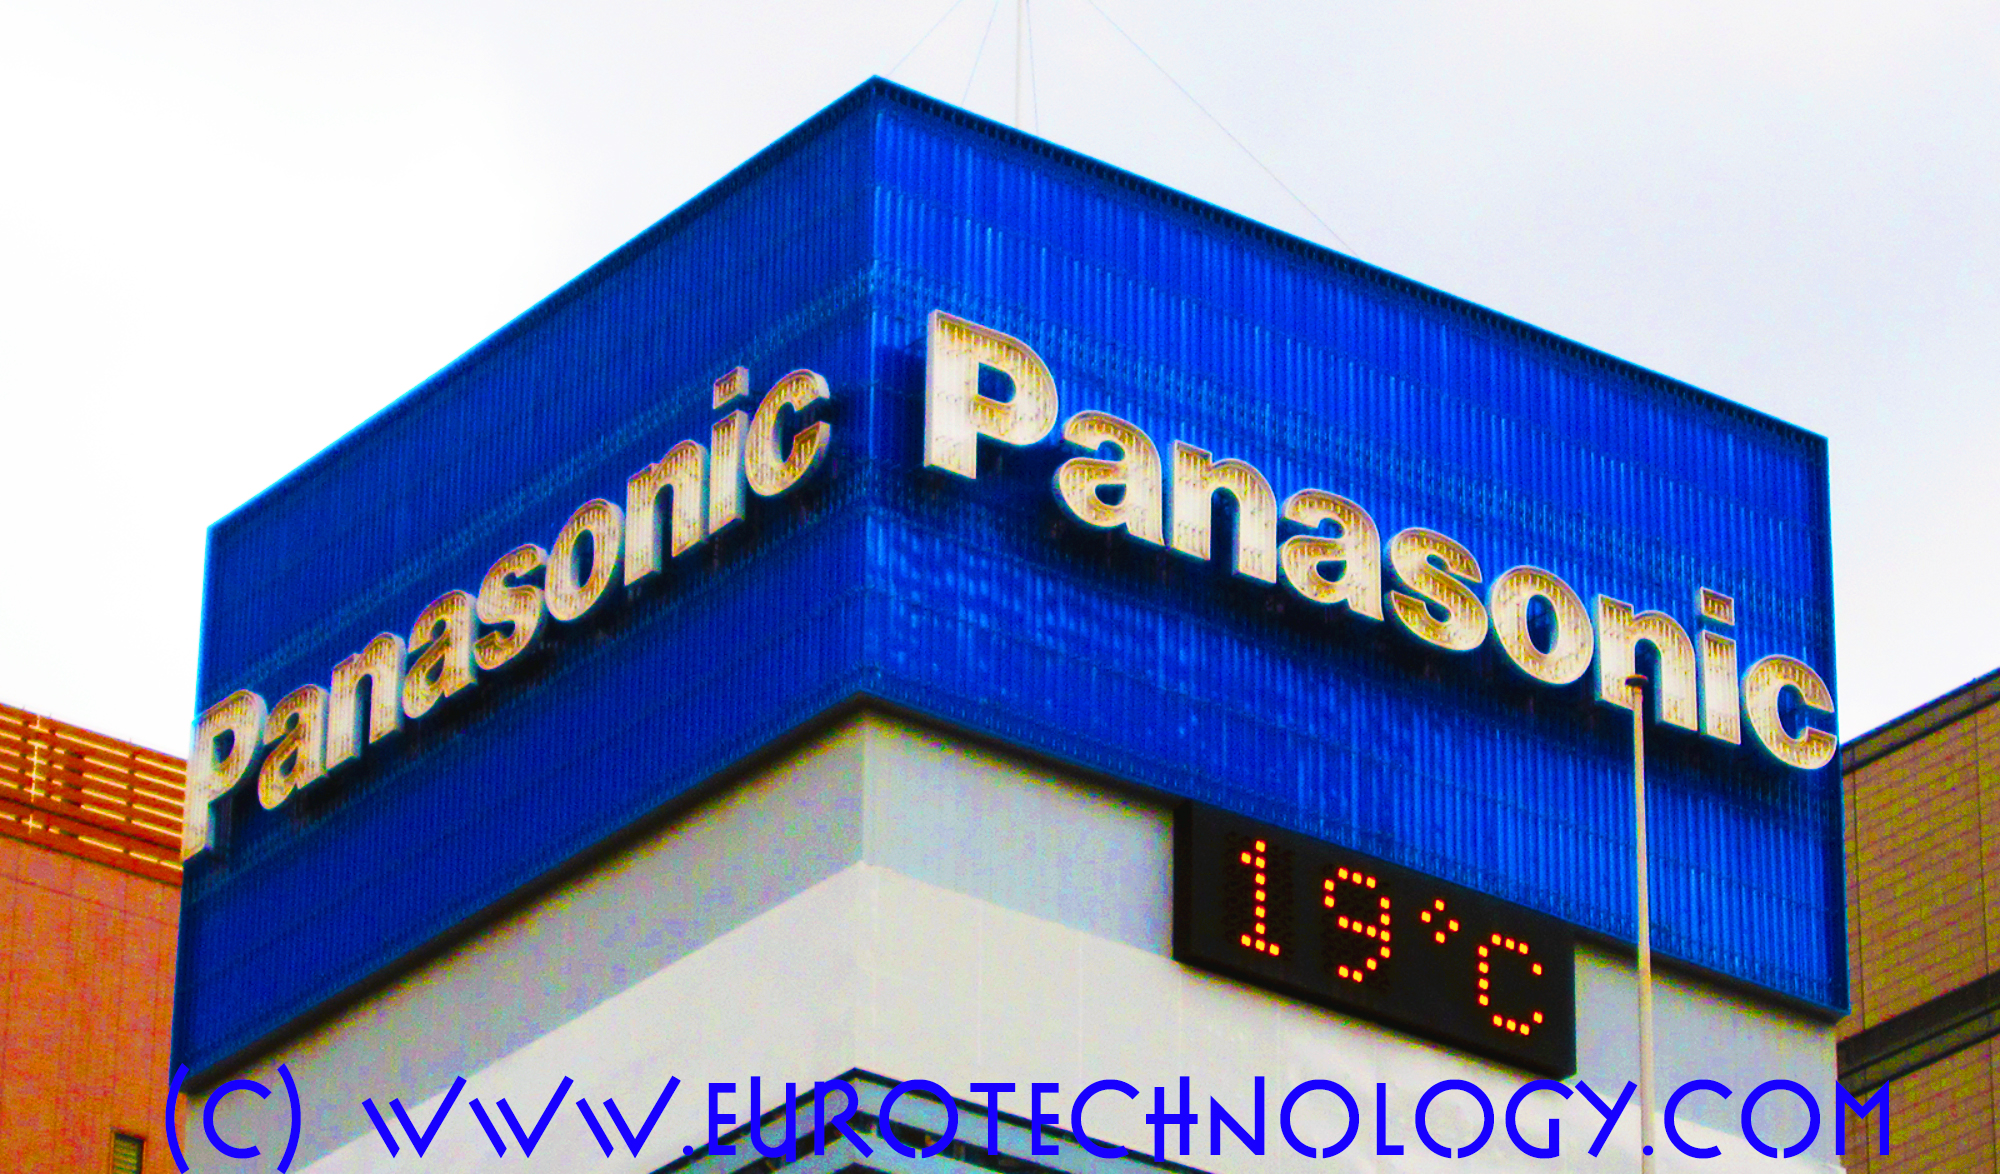 Panasonic negotiates to acquire SANYO to form US$ 110 billion group